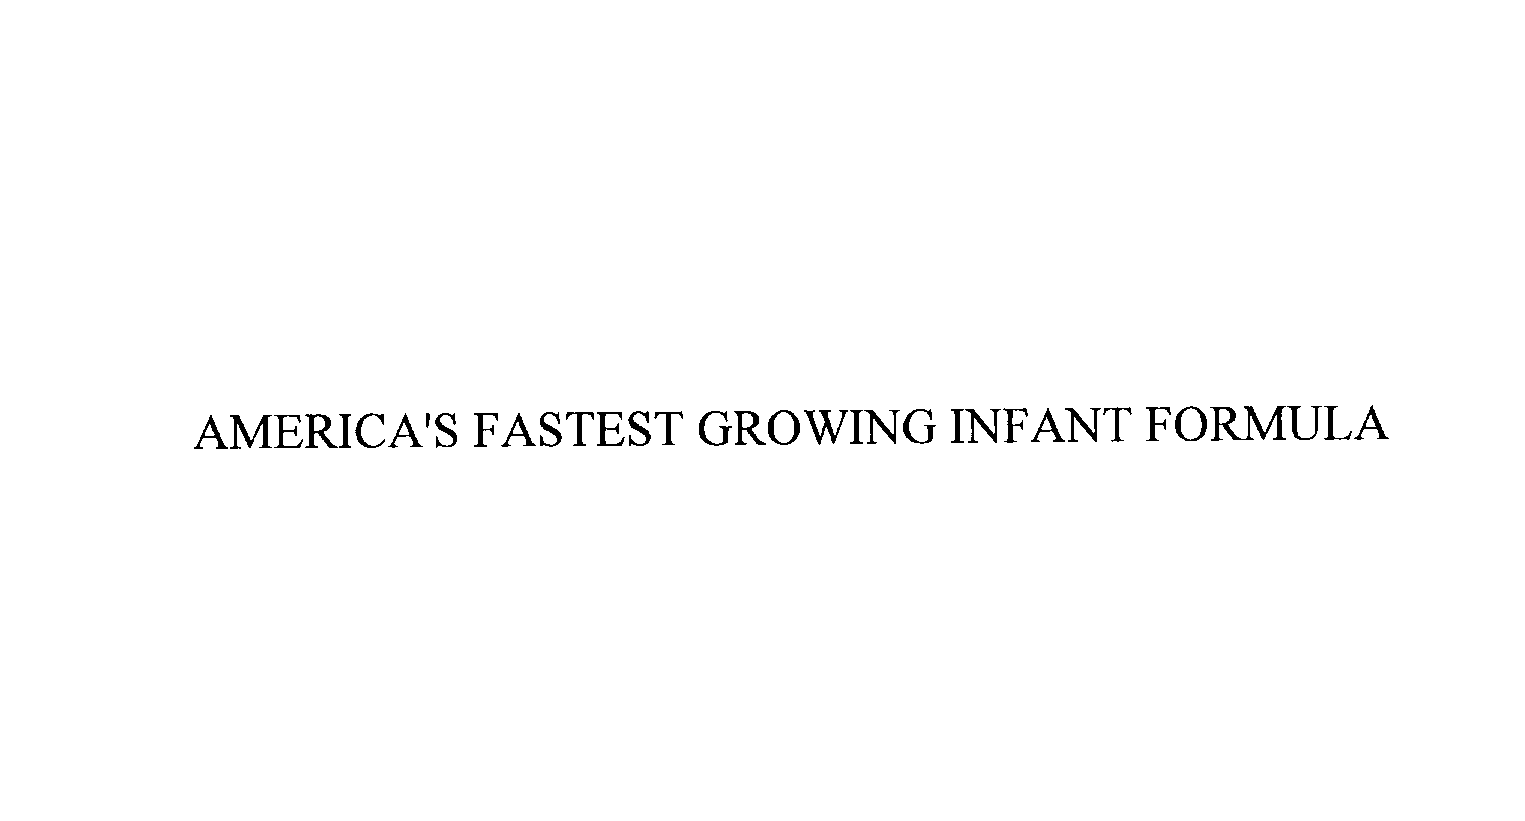  AMERICA'S FASTEST GROWING INFANT FORMULA